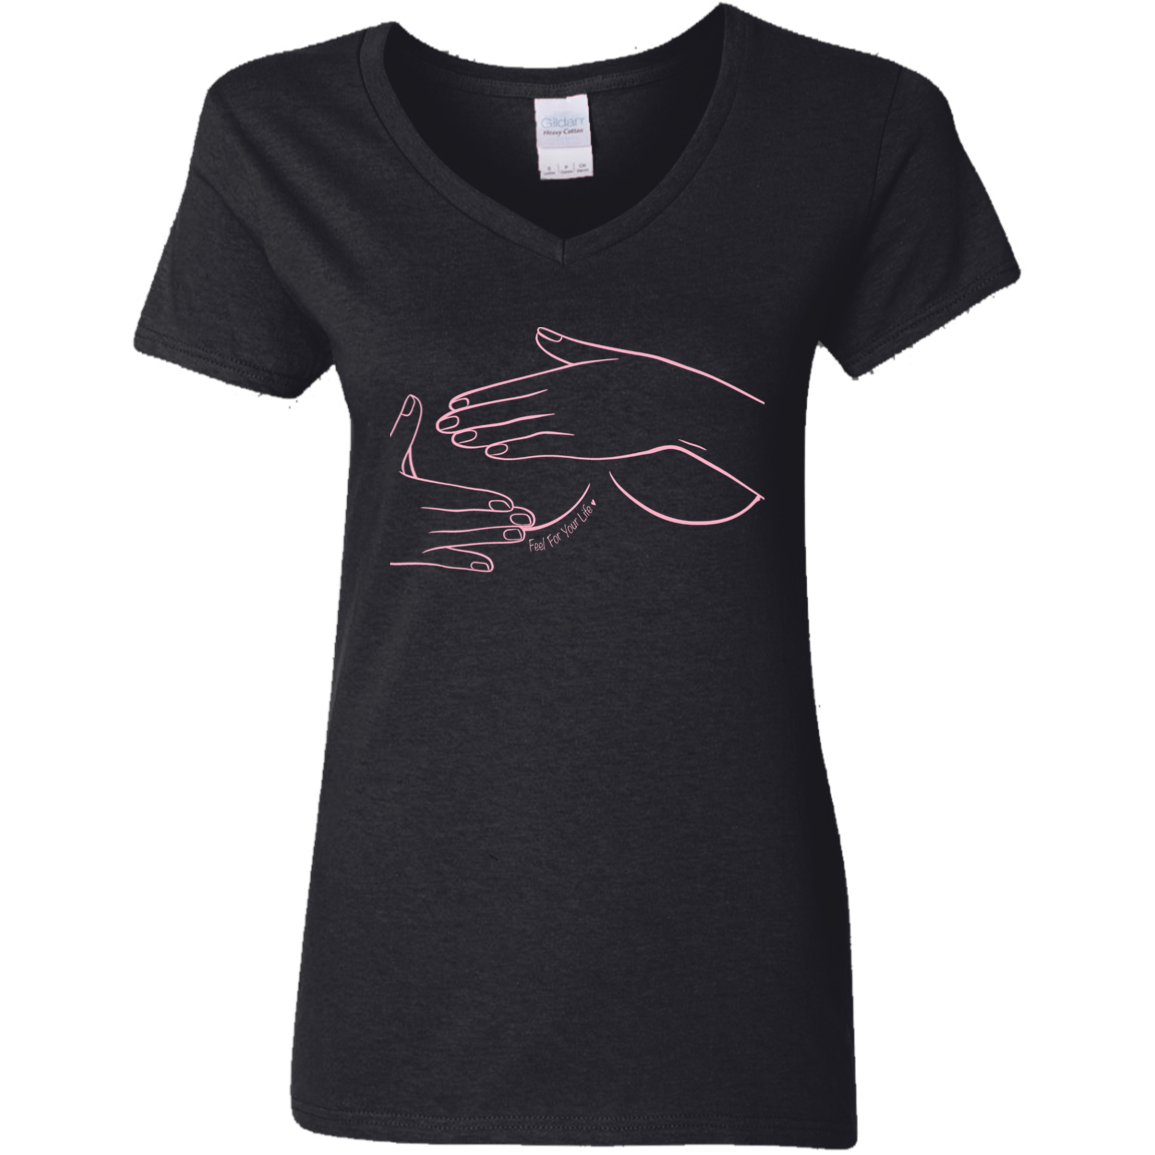 Self Breast Exam Ladies' V-Neck T-Shirt Black w/ Light Pink Emblem